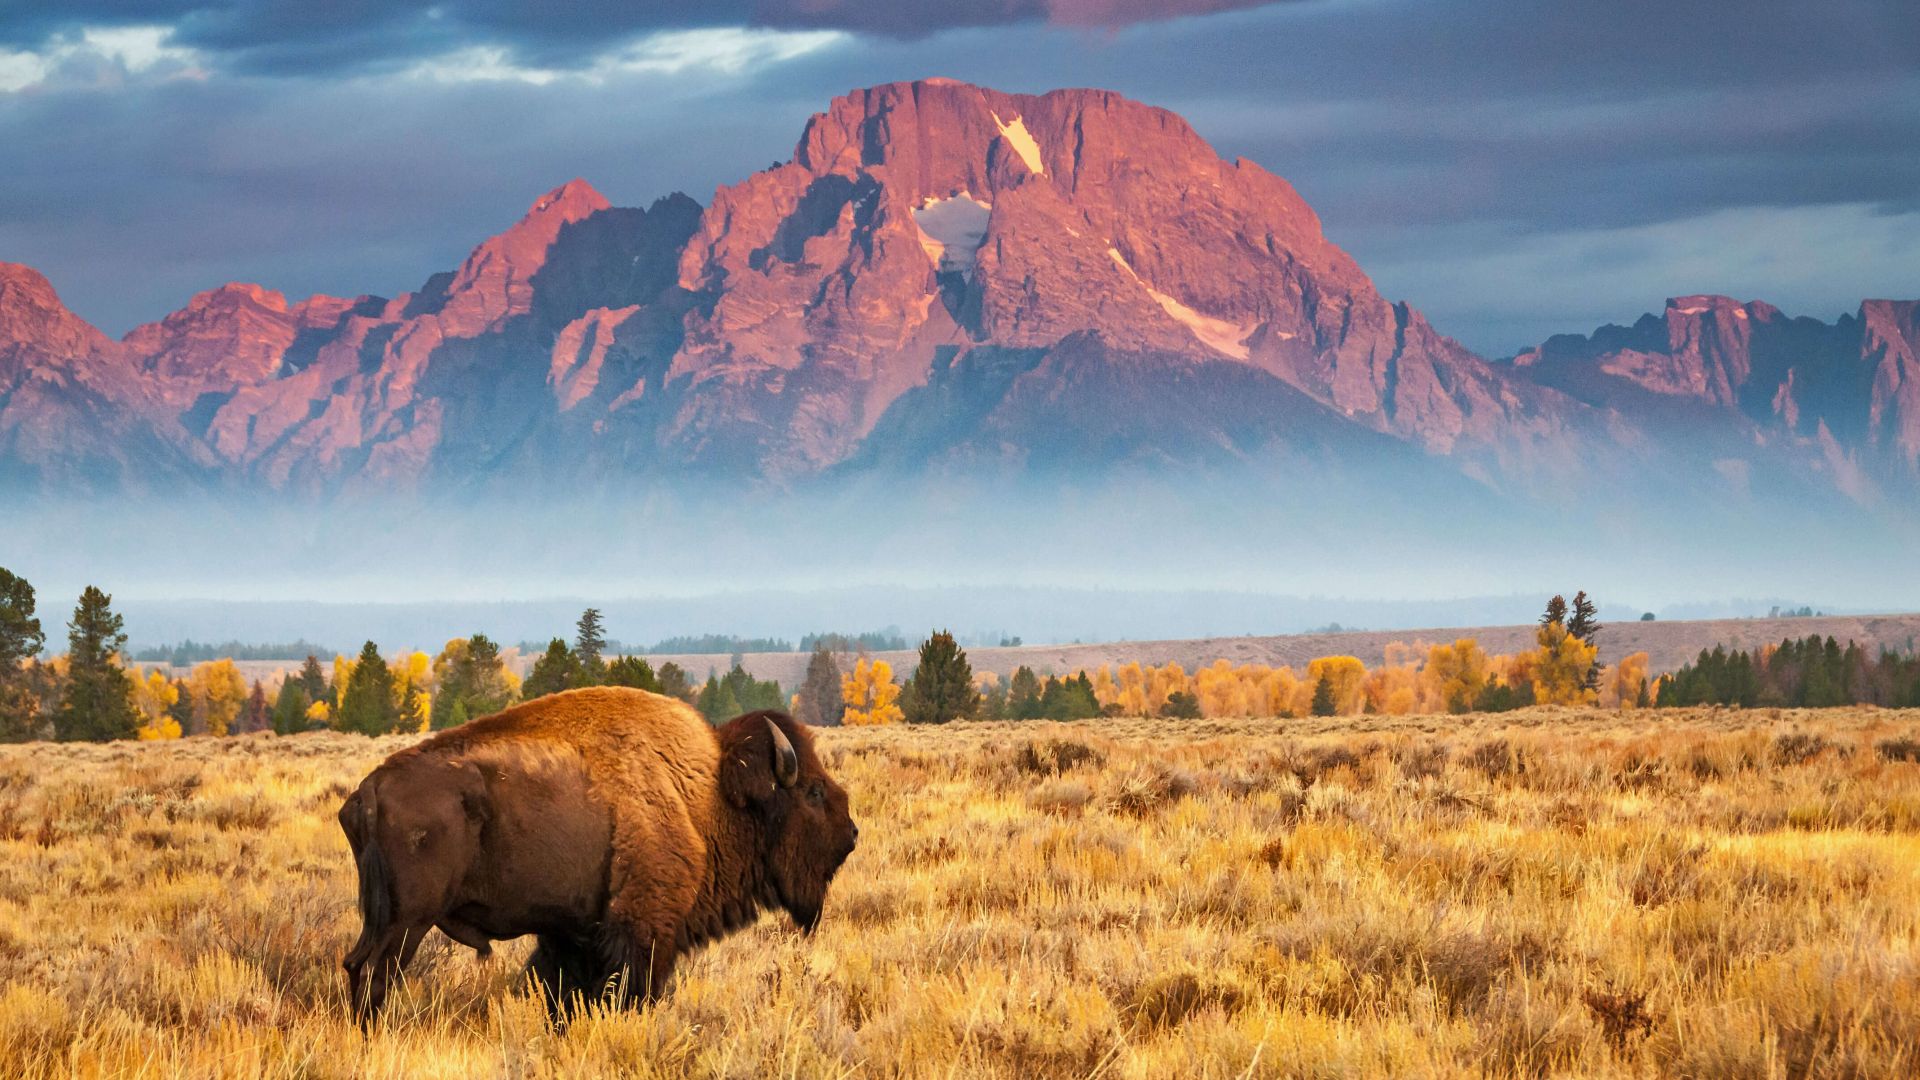 Бизон, bison, Grand Teton National Park, Wyoming, USA, Bing, Microsoft, 4K (horizontal)